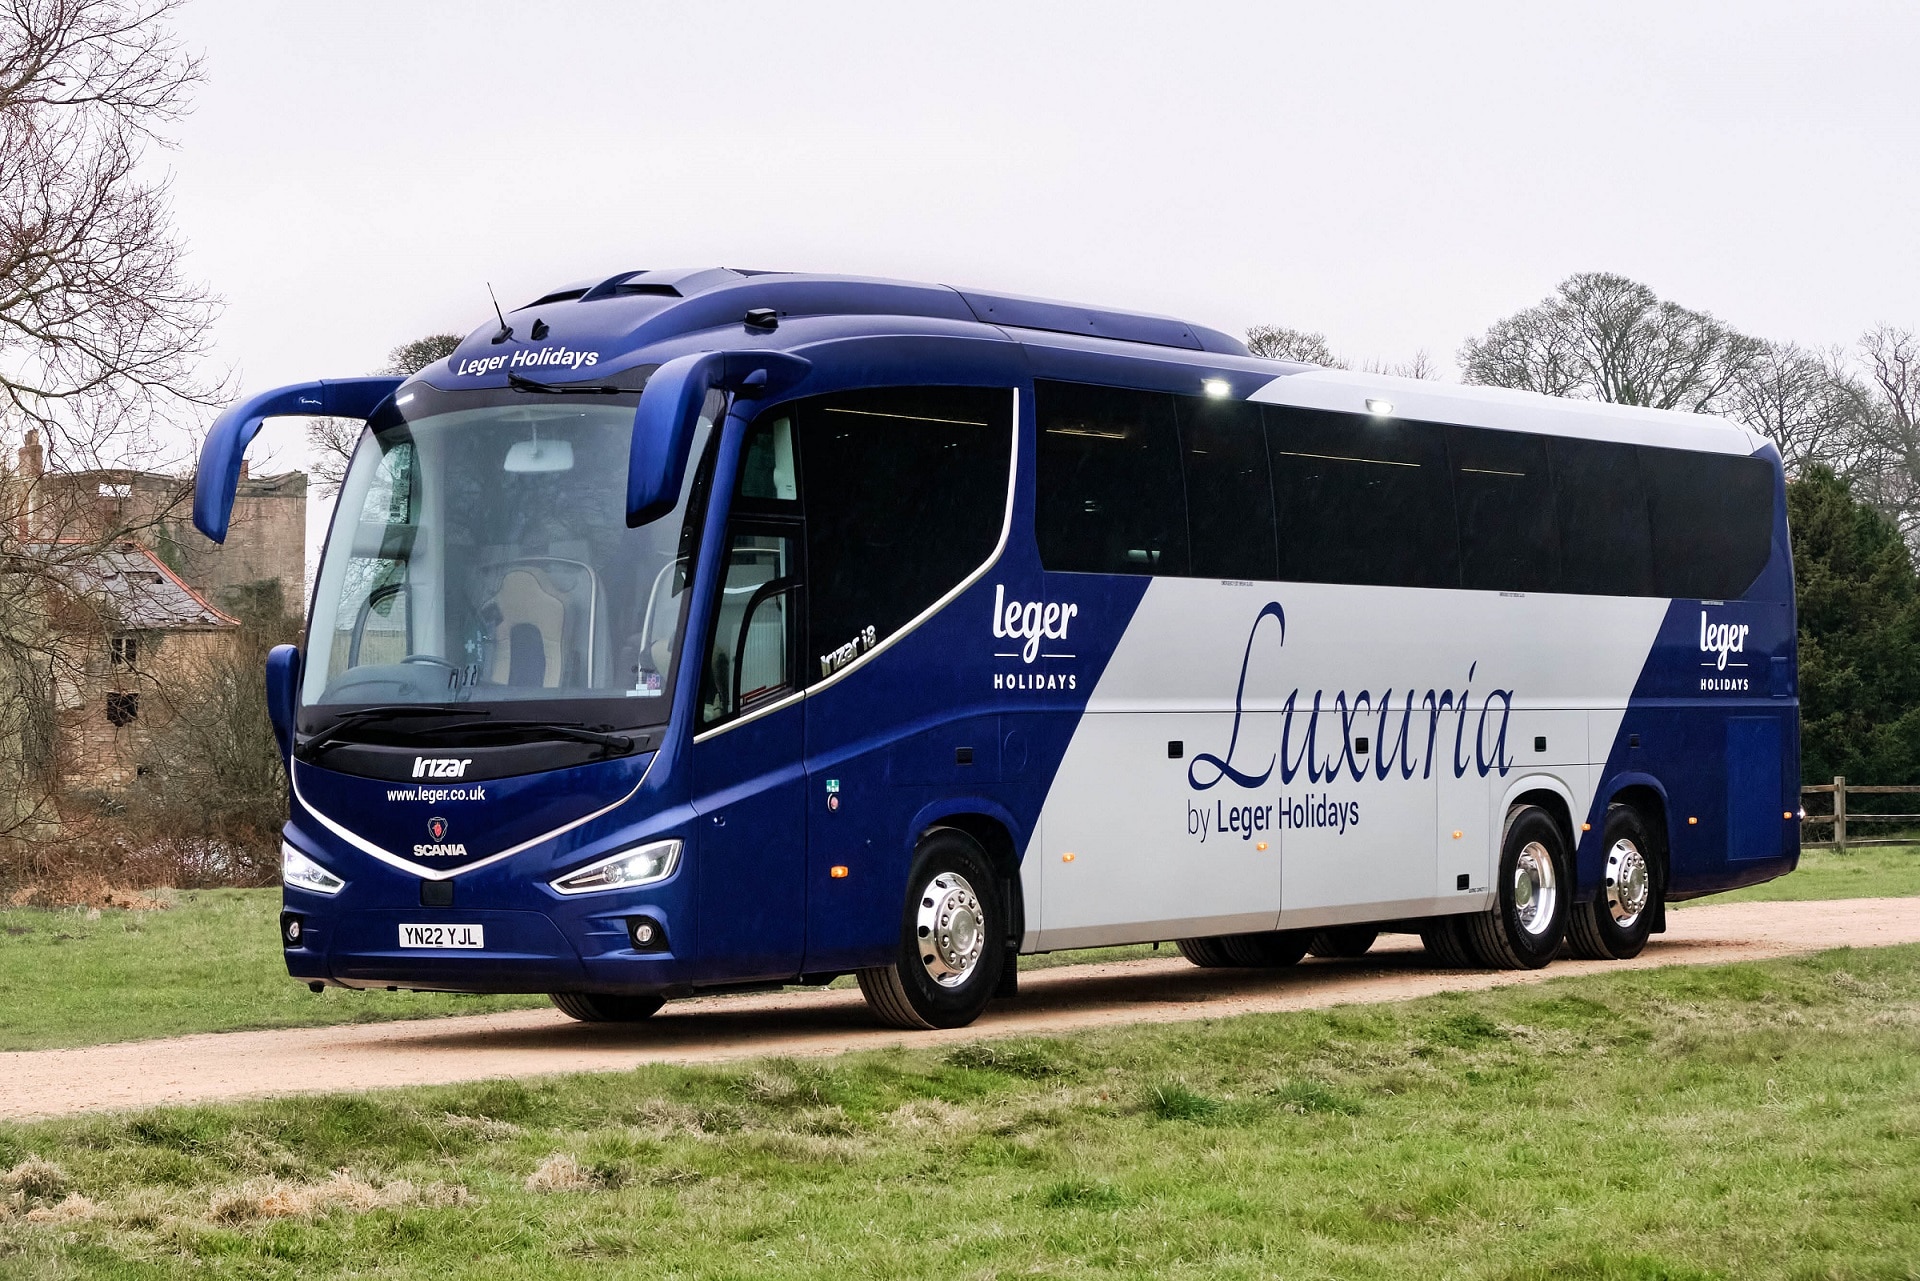 Scania Irizar i8 in Leger Luxuria livery